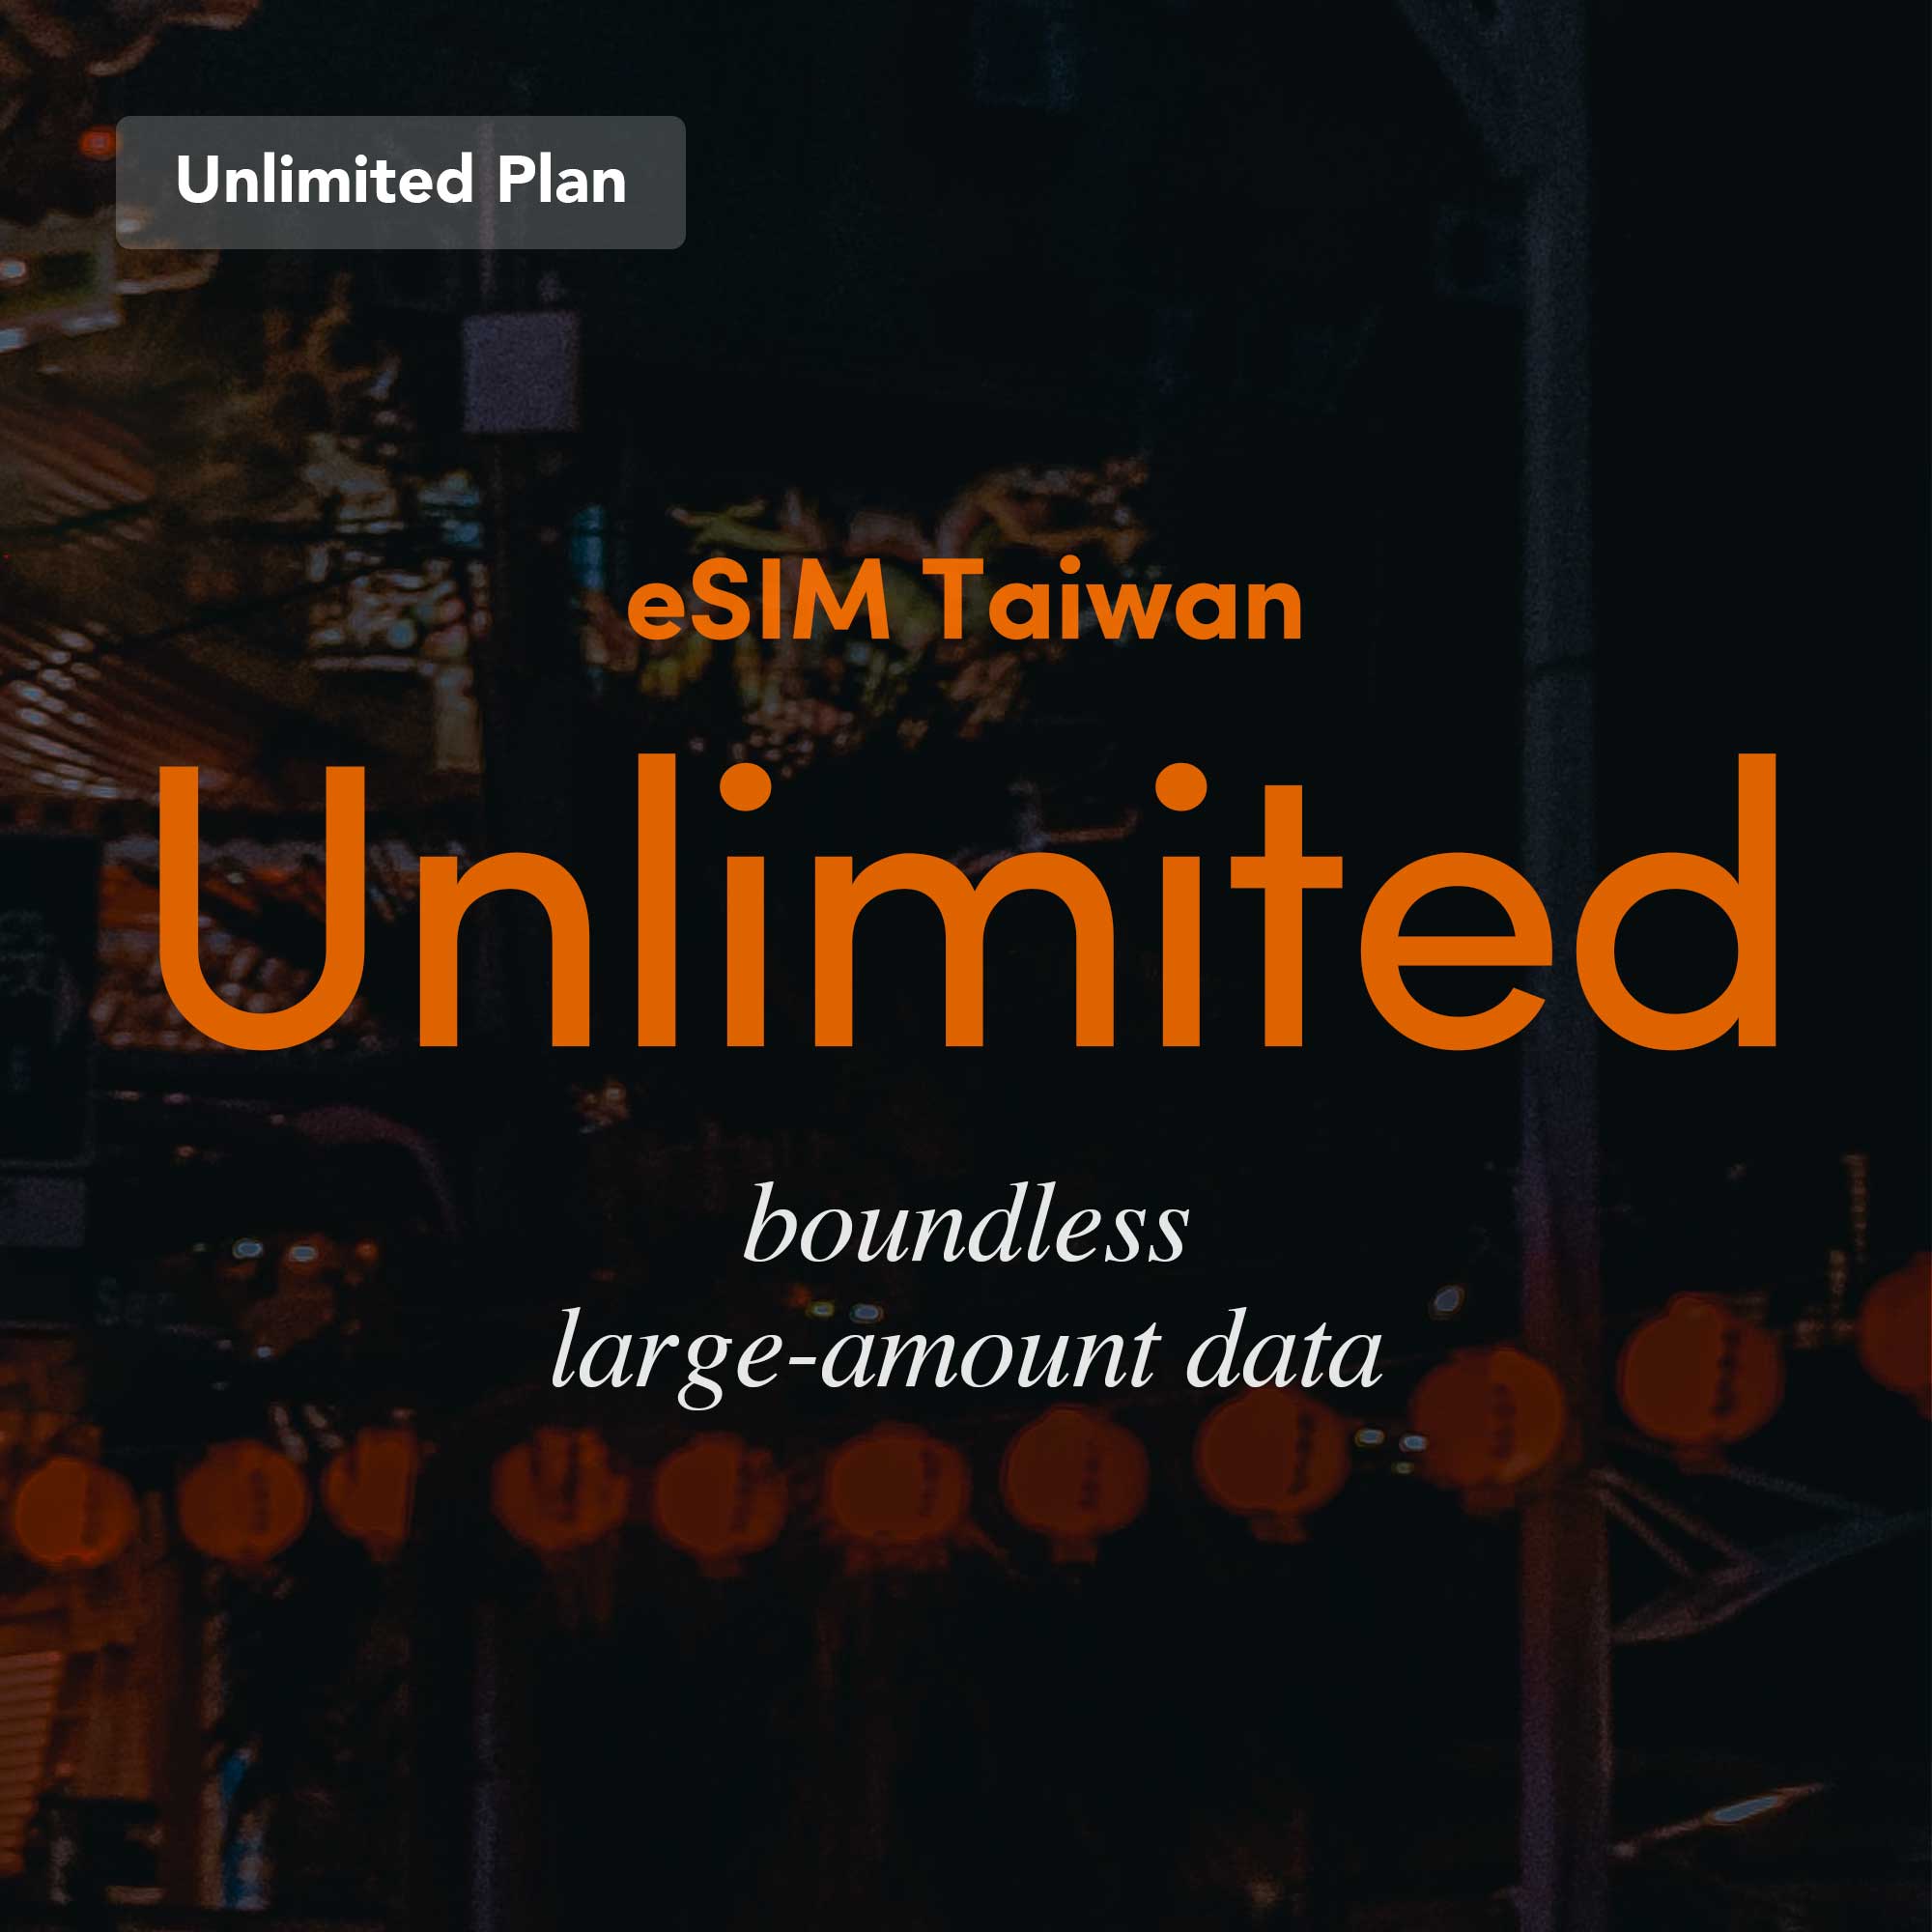 eSIM Taiwan Unlimited Plan